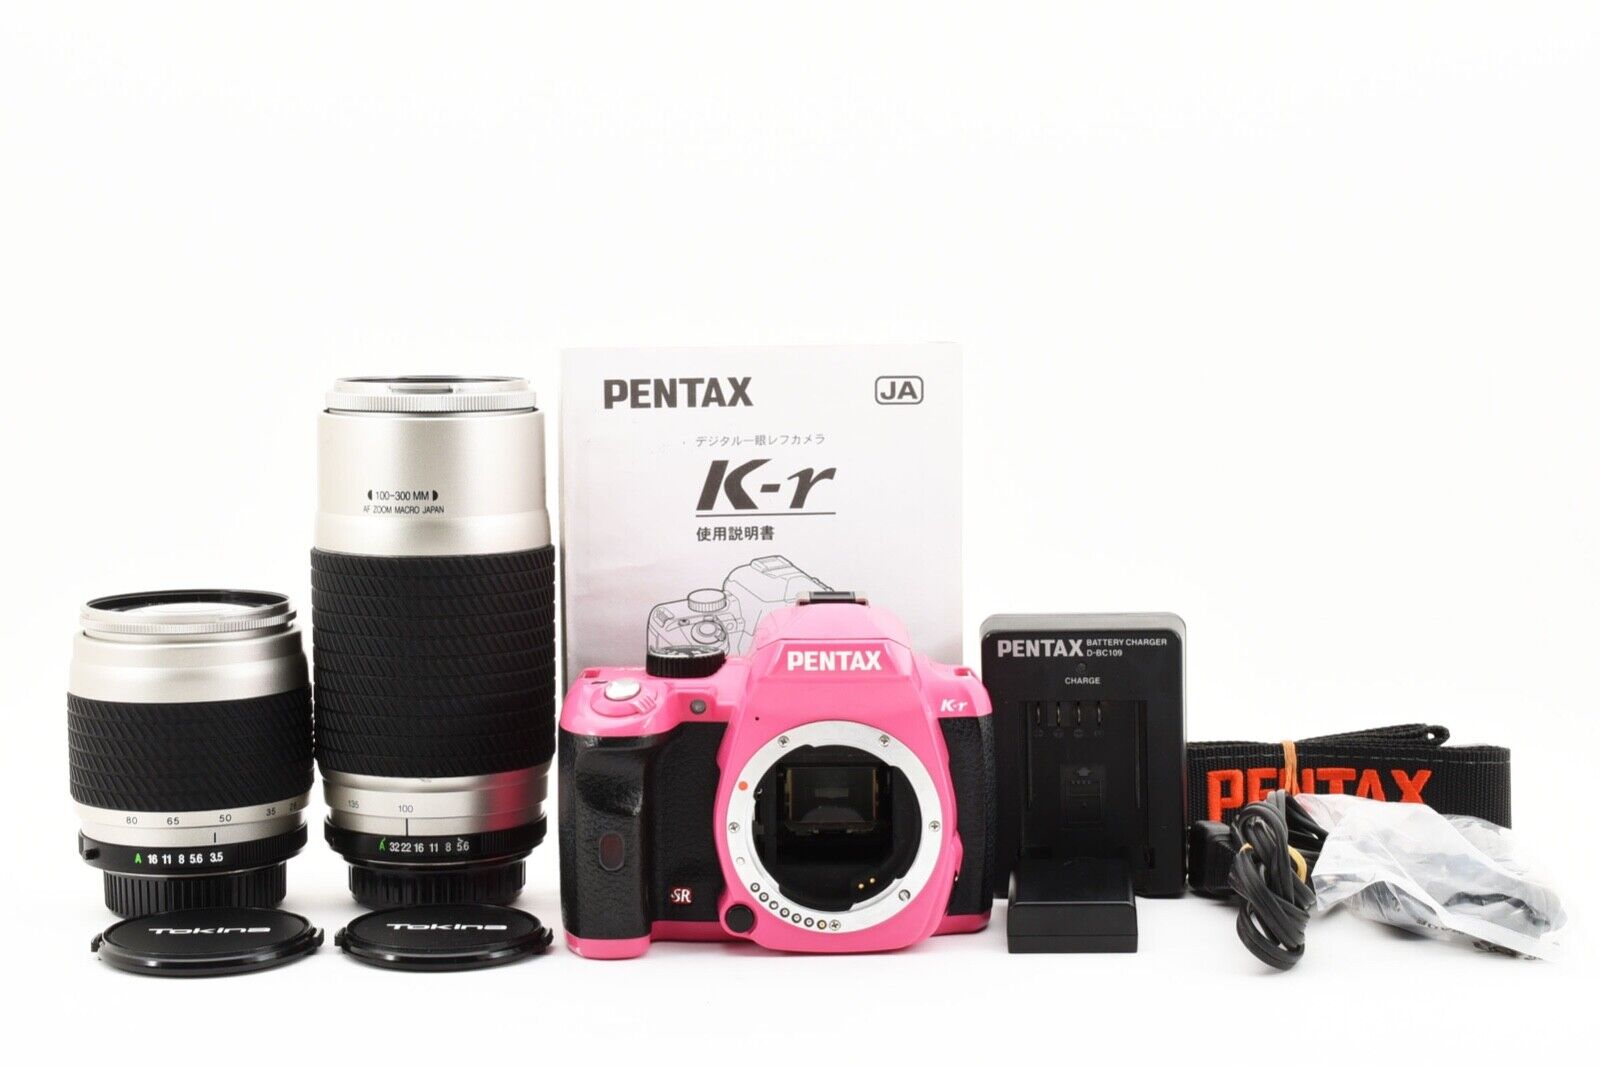 PENTAX K-r 12.4MP Digital SLR Camera Pink Body w/Two Lens Set from Japan F/S